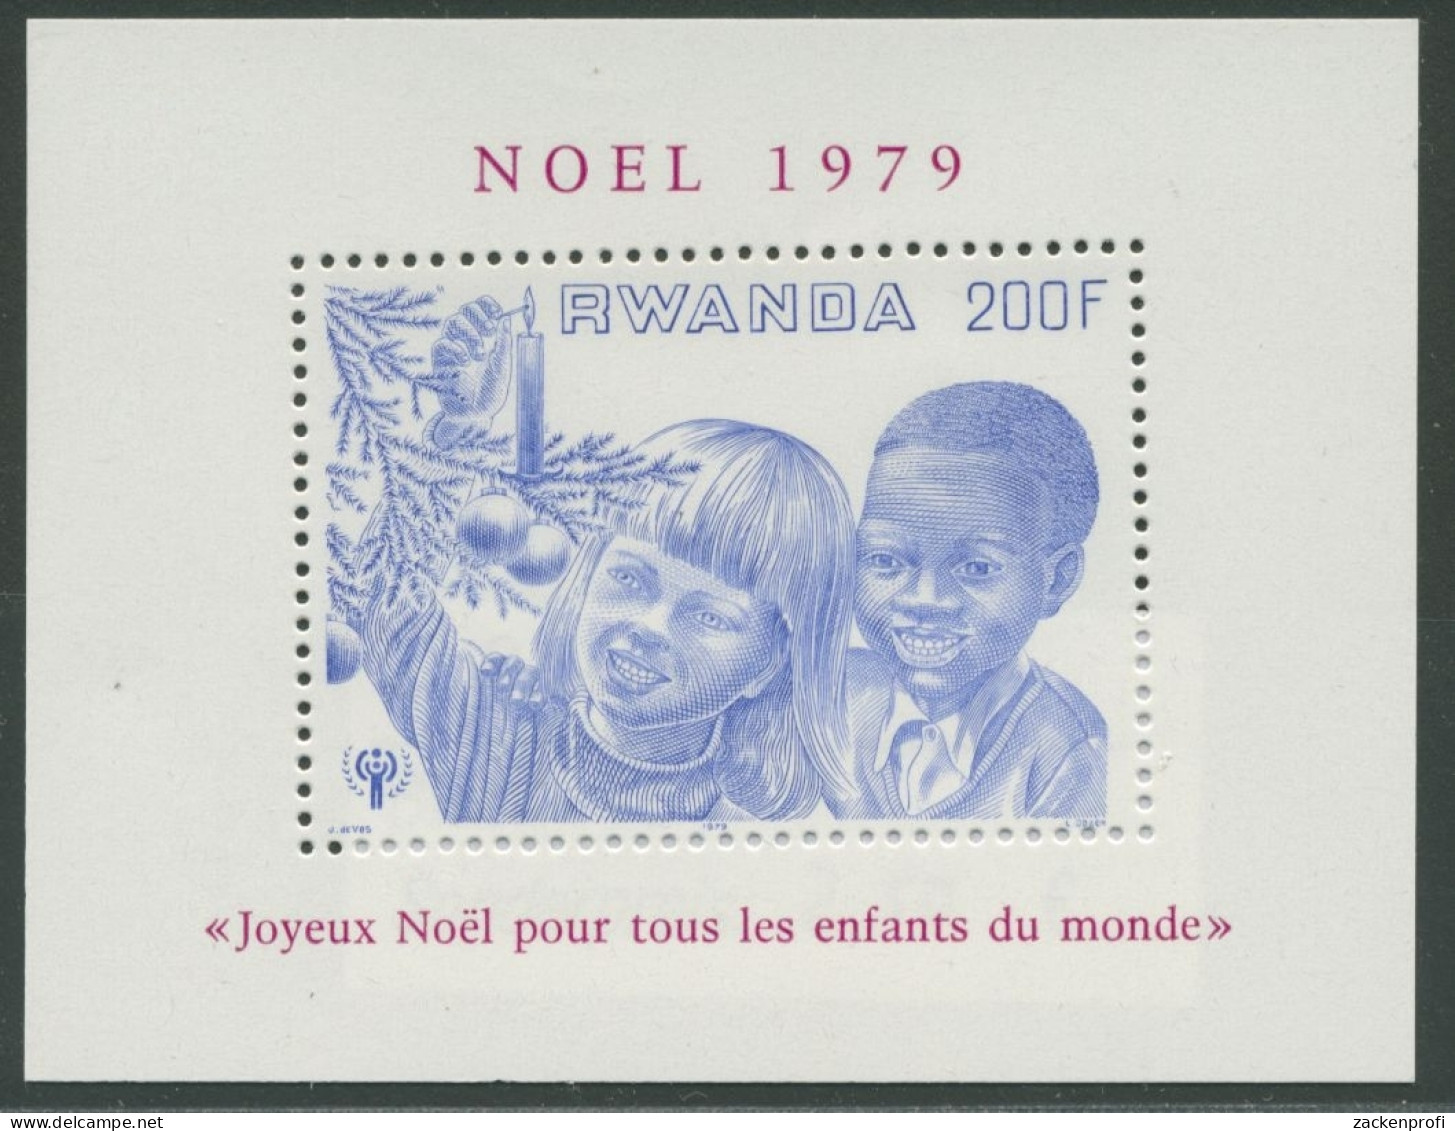 Ruanda 1979 Internationales Jahr Des Kindes Block 87 Postfrisch (C29865) - Nuevos